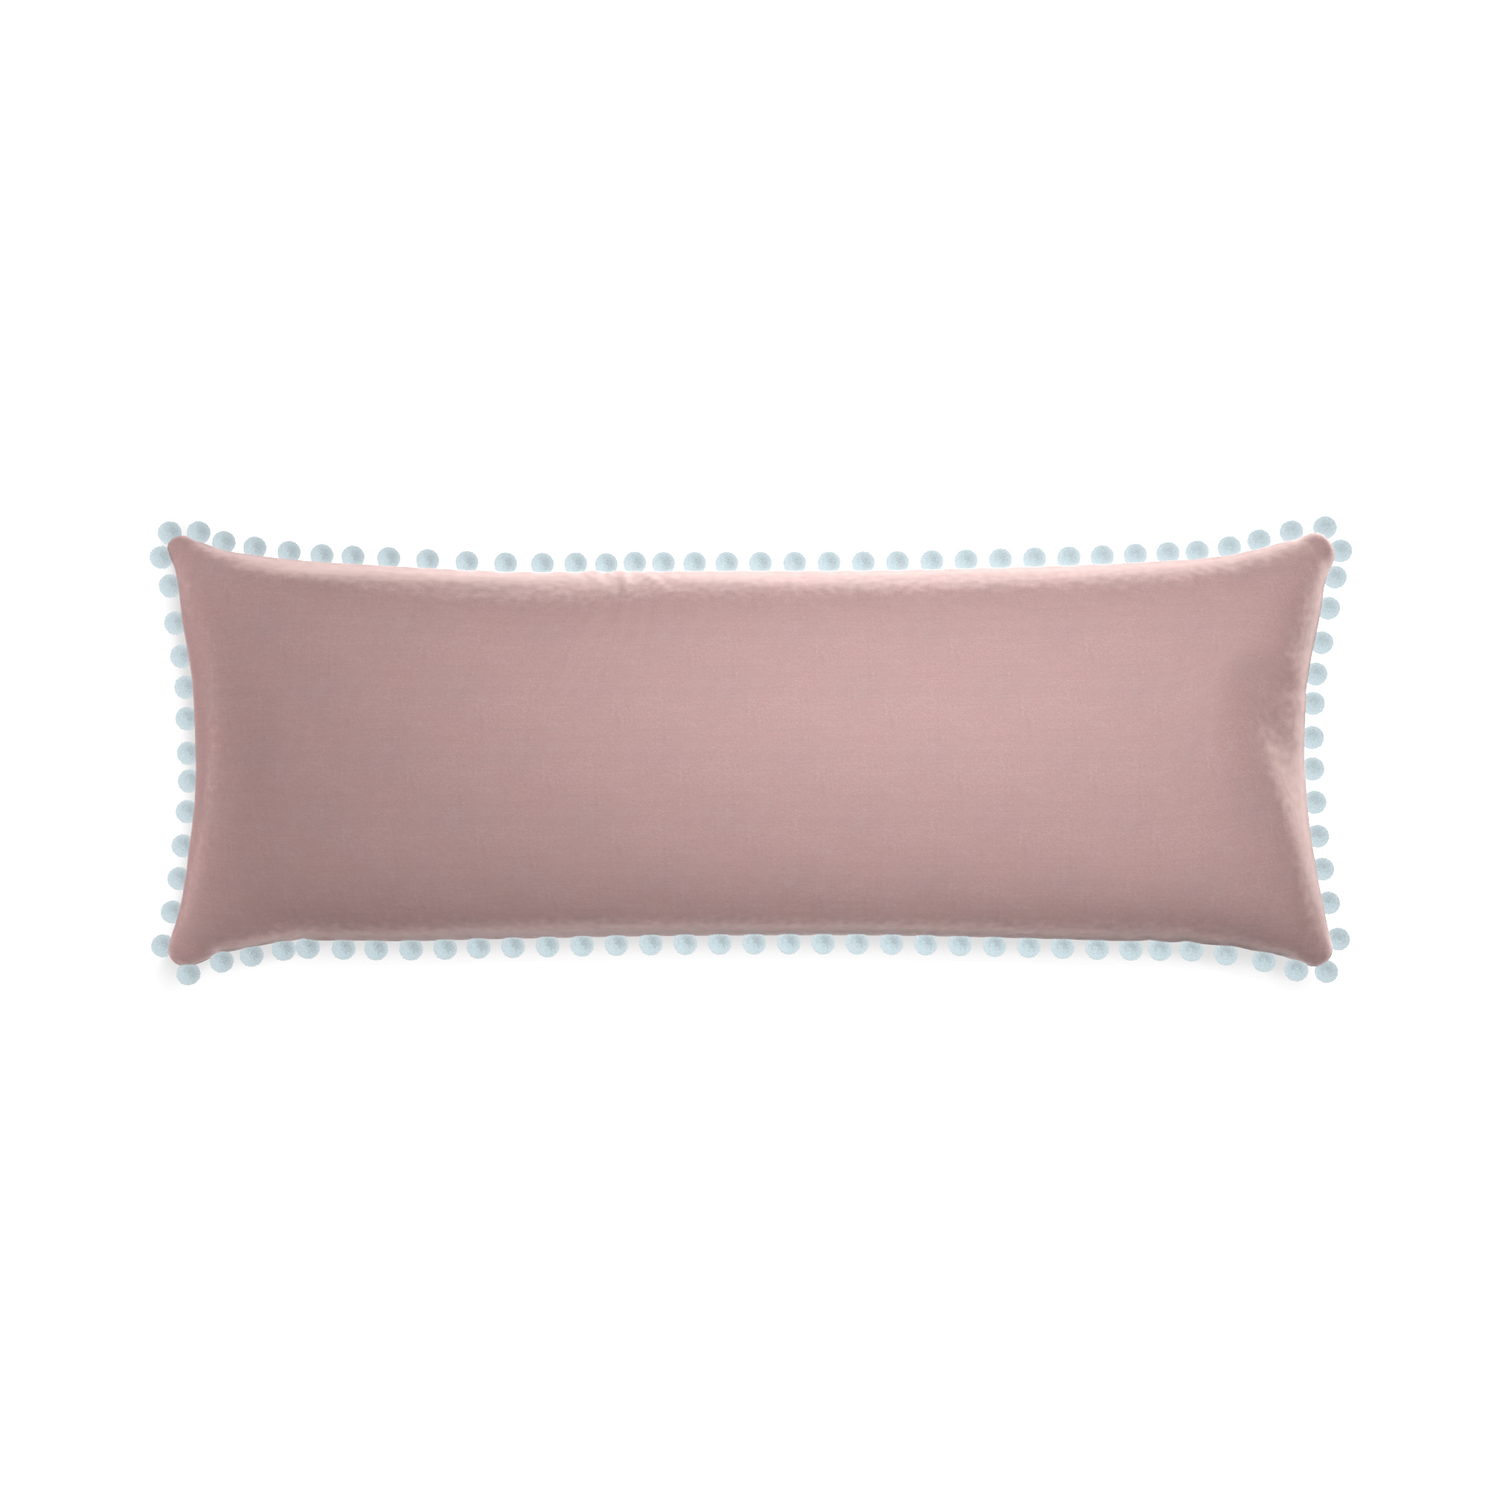 Xl-lumbar mauve velvet custom pillow with powder pom pom on white background